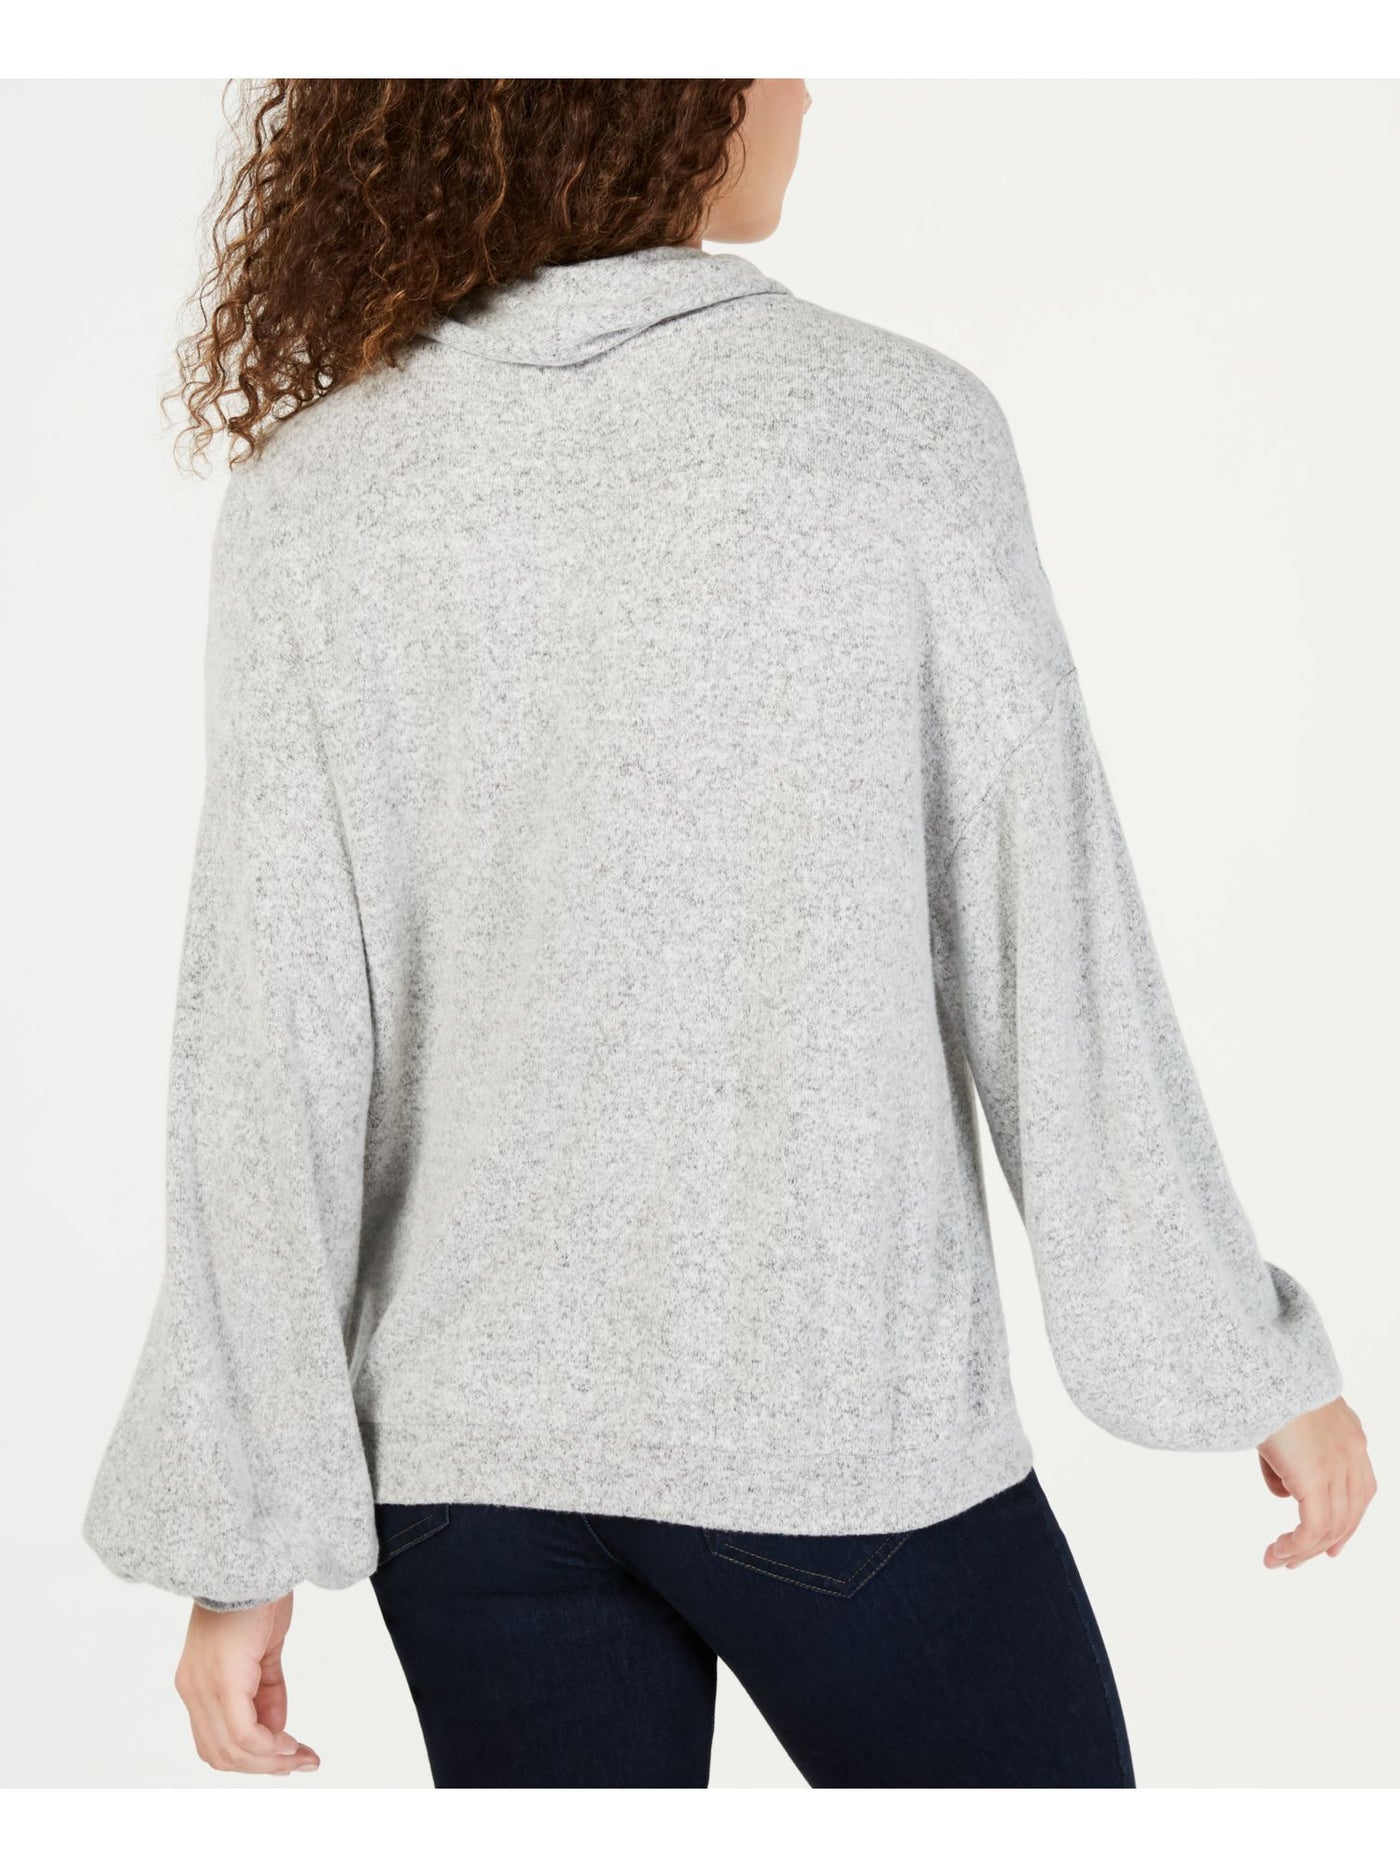 INC Womens Gray Heather Long Sleeve Turtle Neck Sweater XL